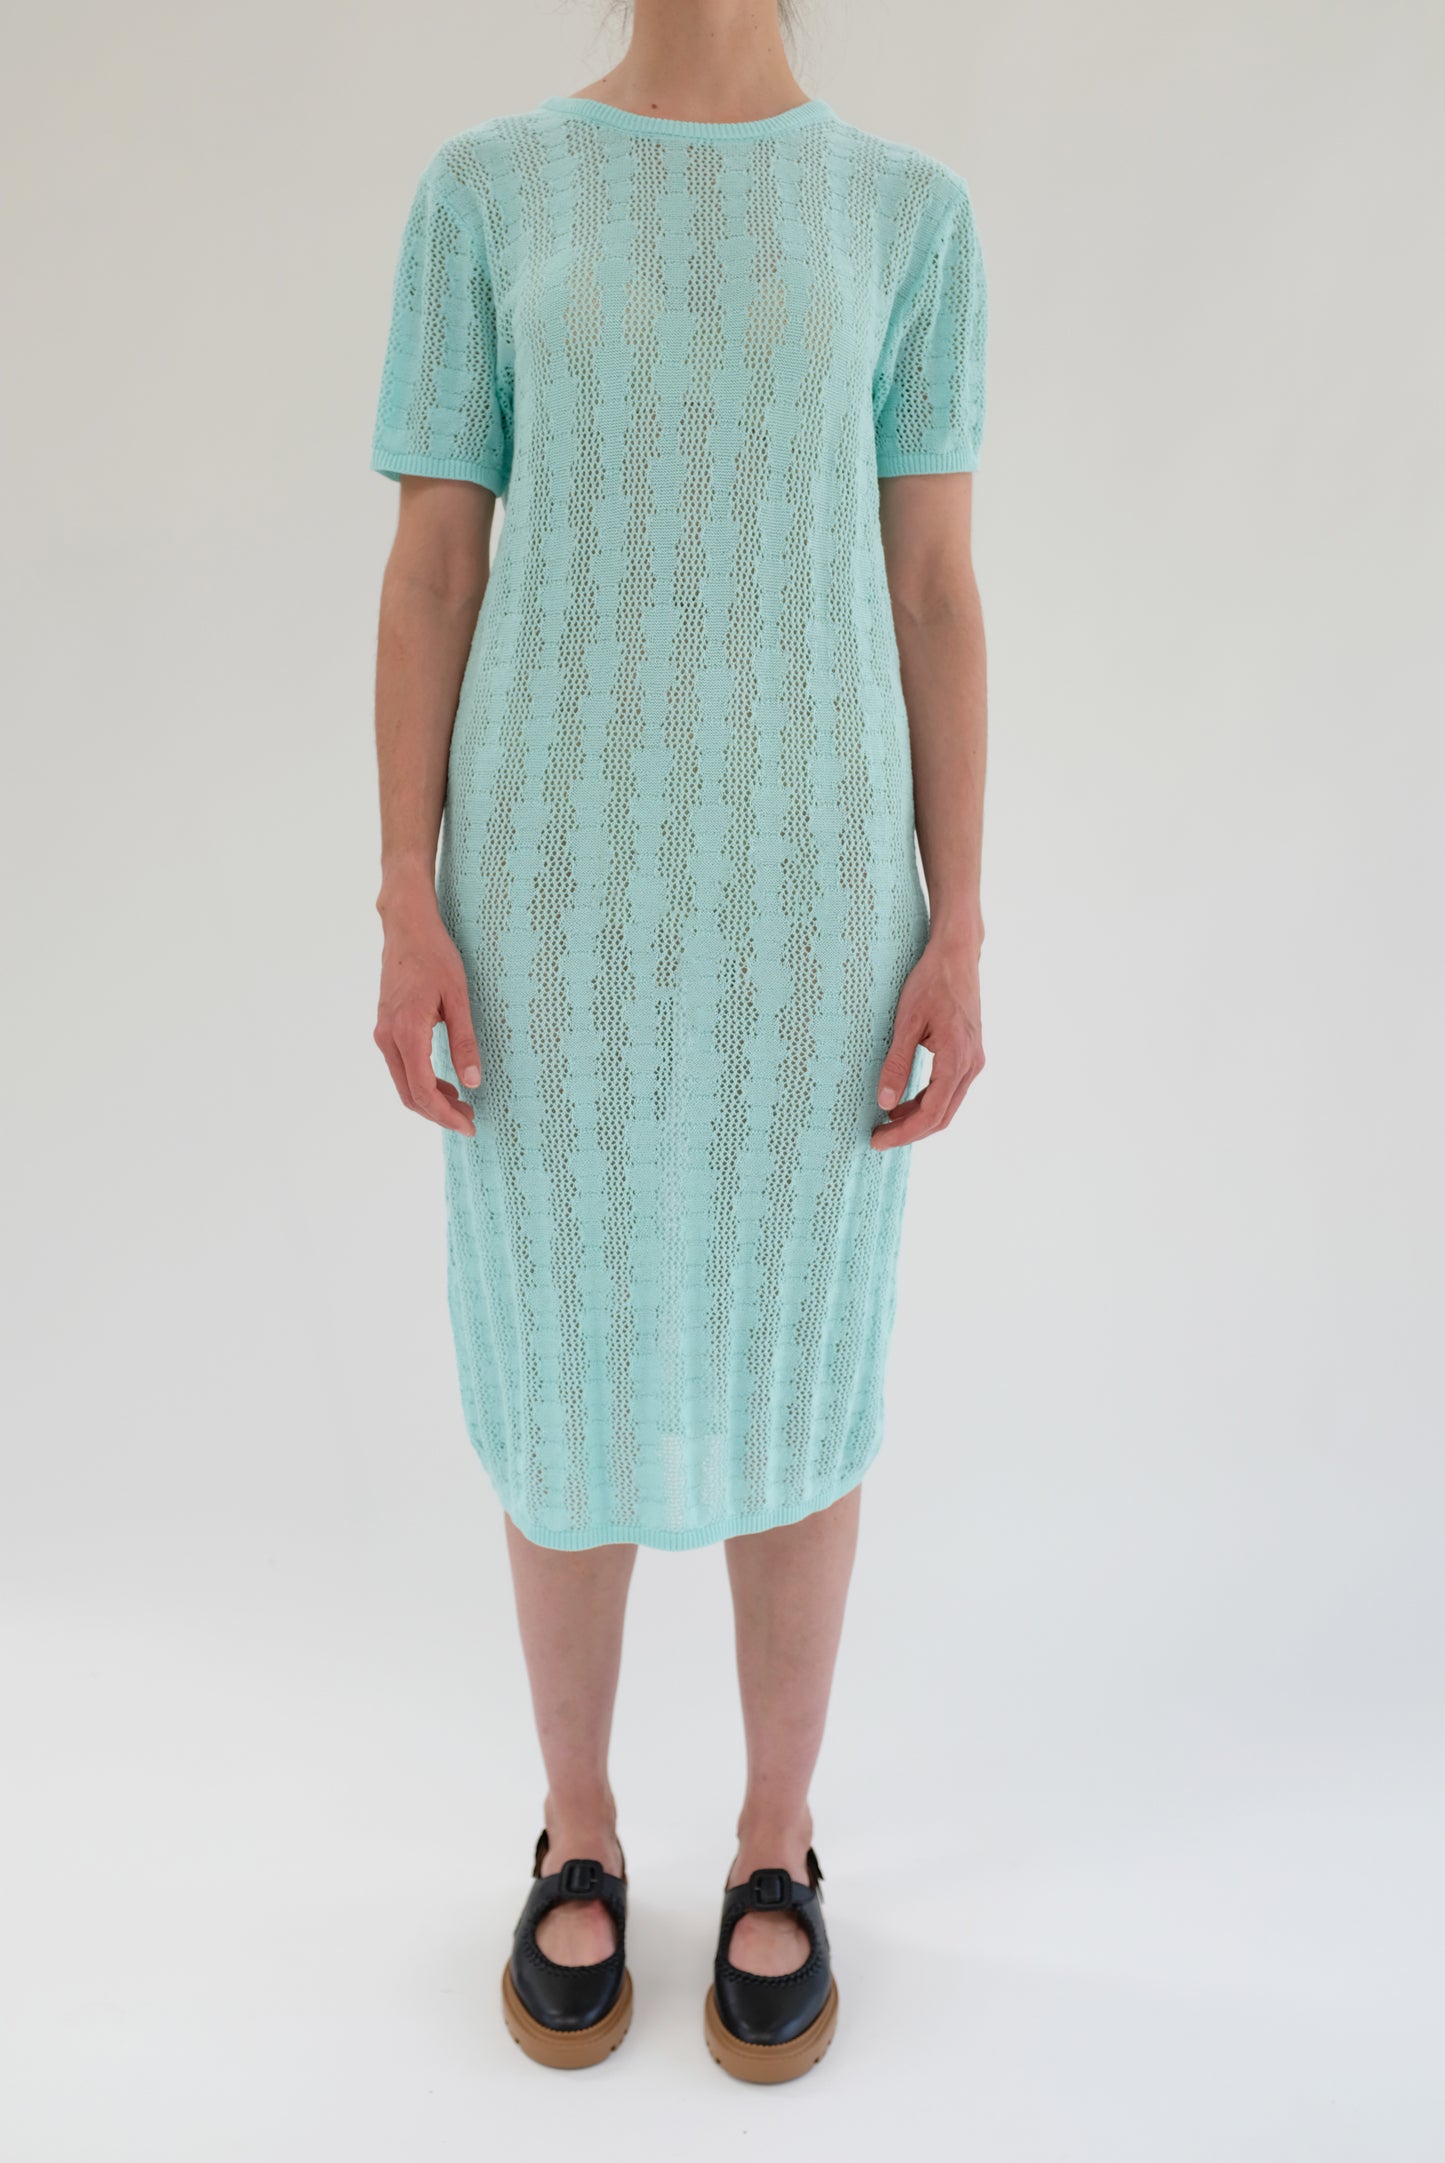 Beklina Bead Curtain Lace T-Shirt Dress Aqua